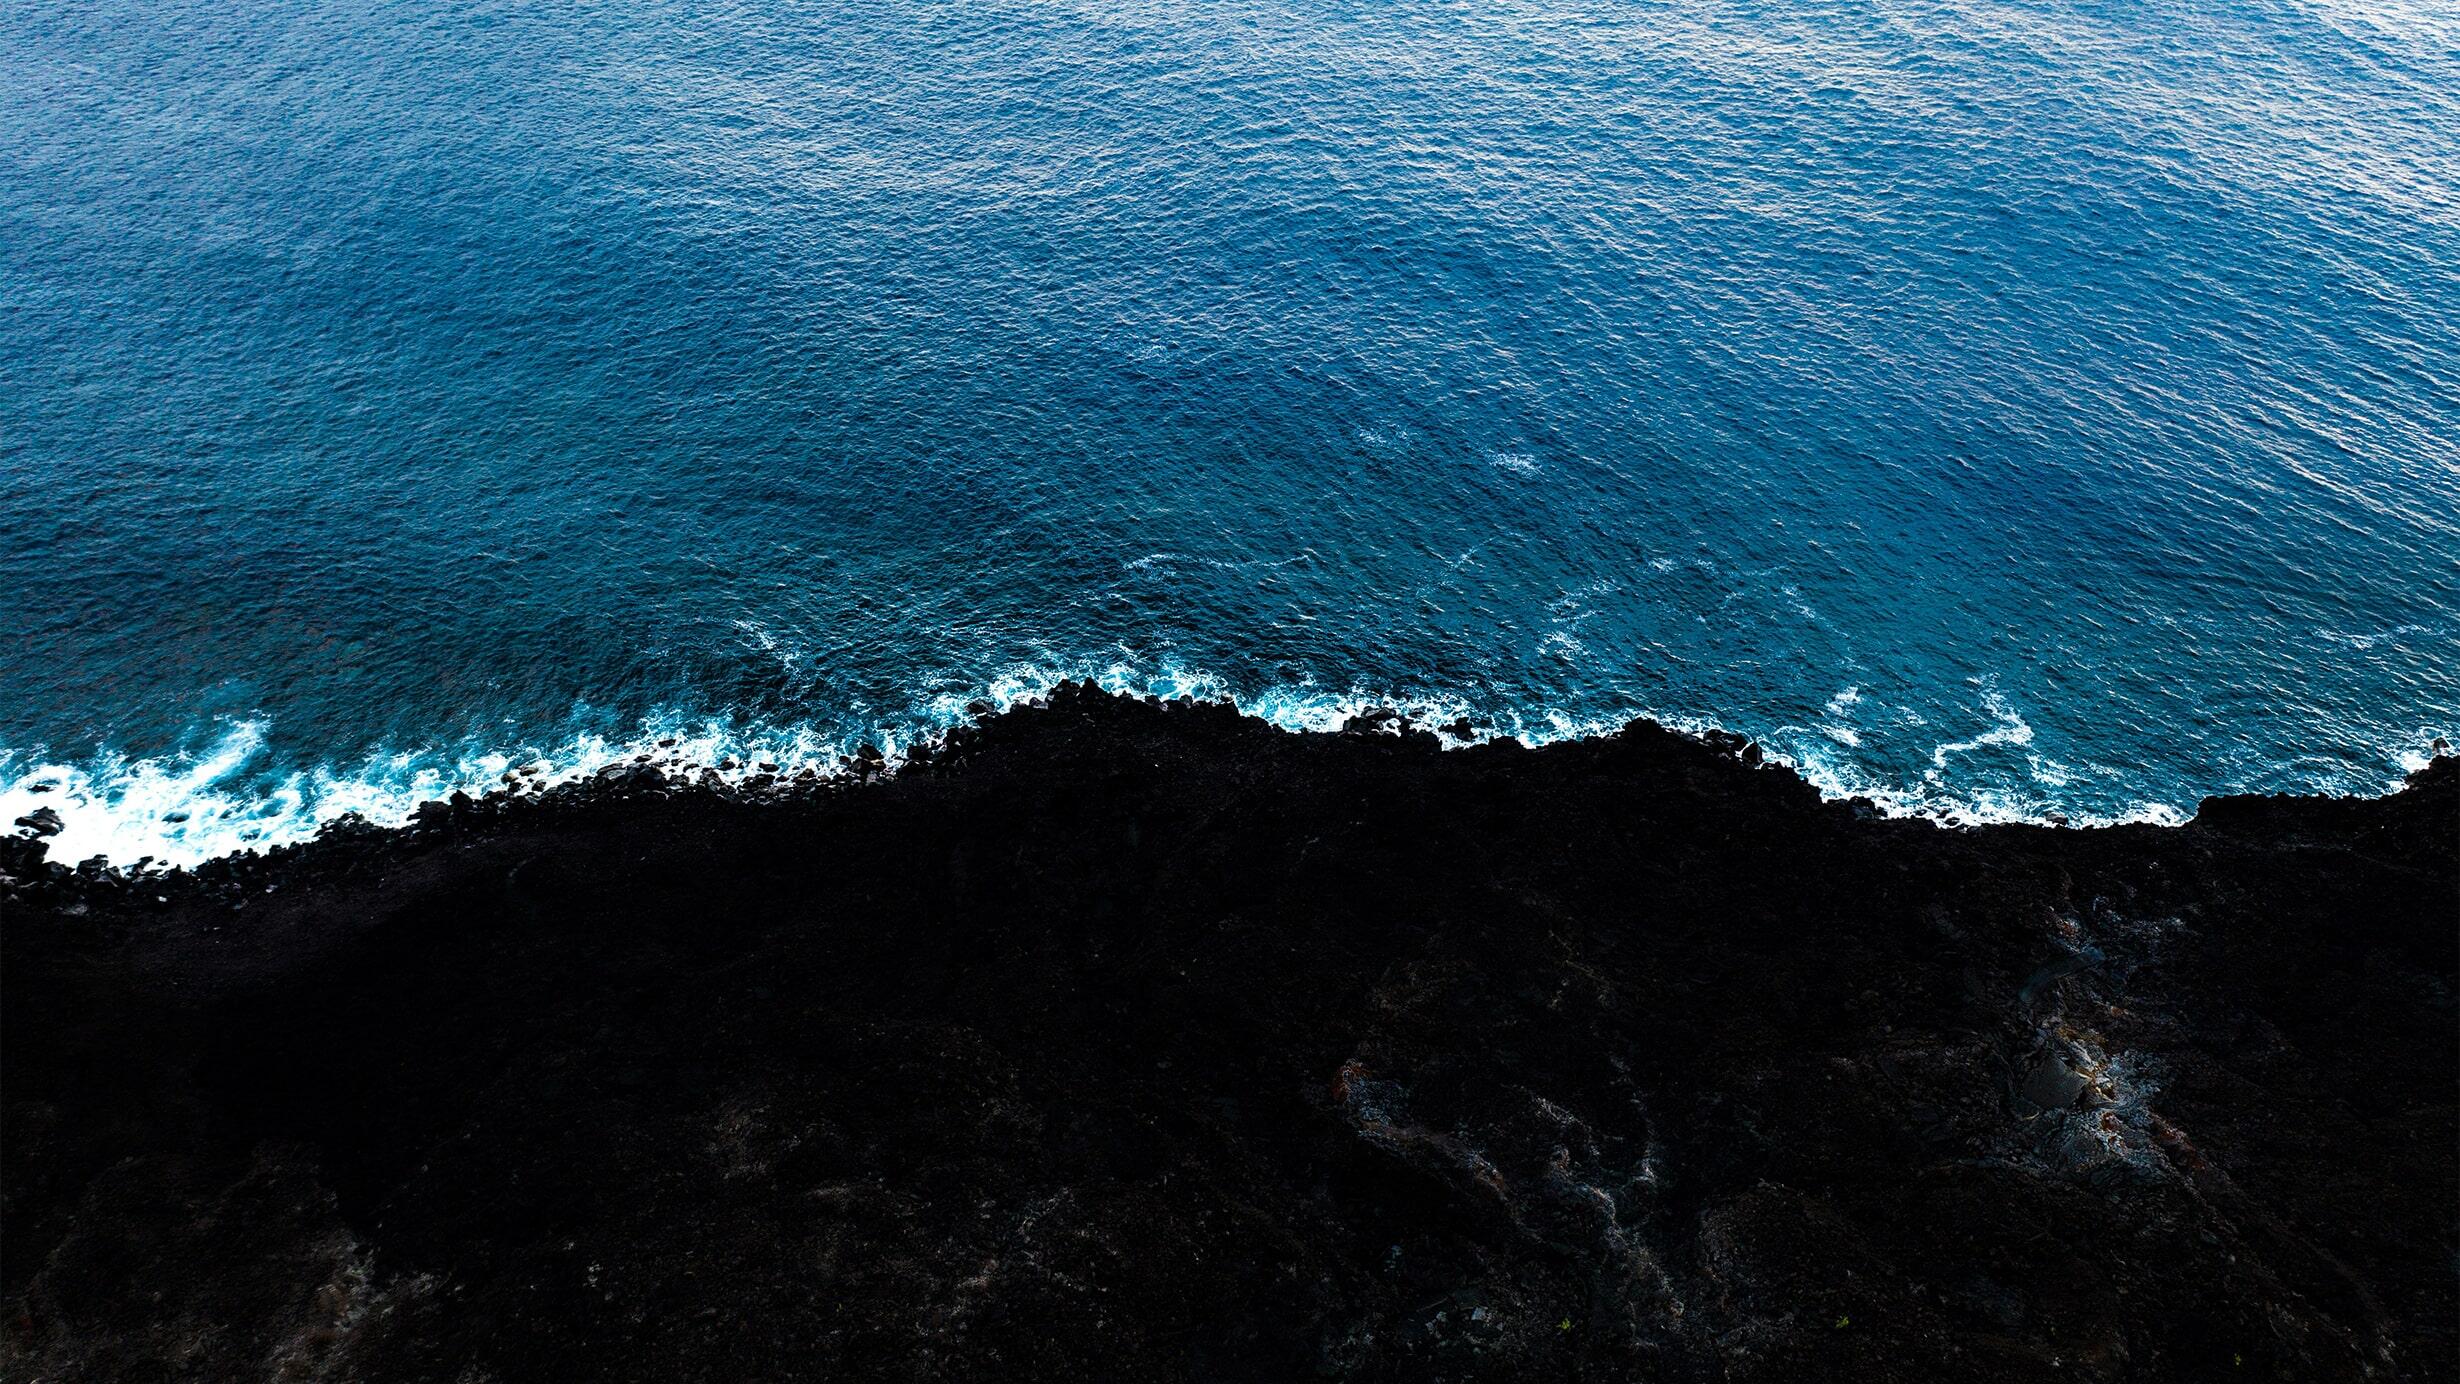 An aerial photograph of a waves on the shore: a rich blue swath of ocean meets a dark, rocky coast.